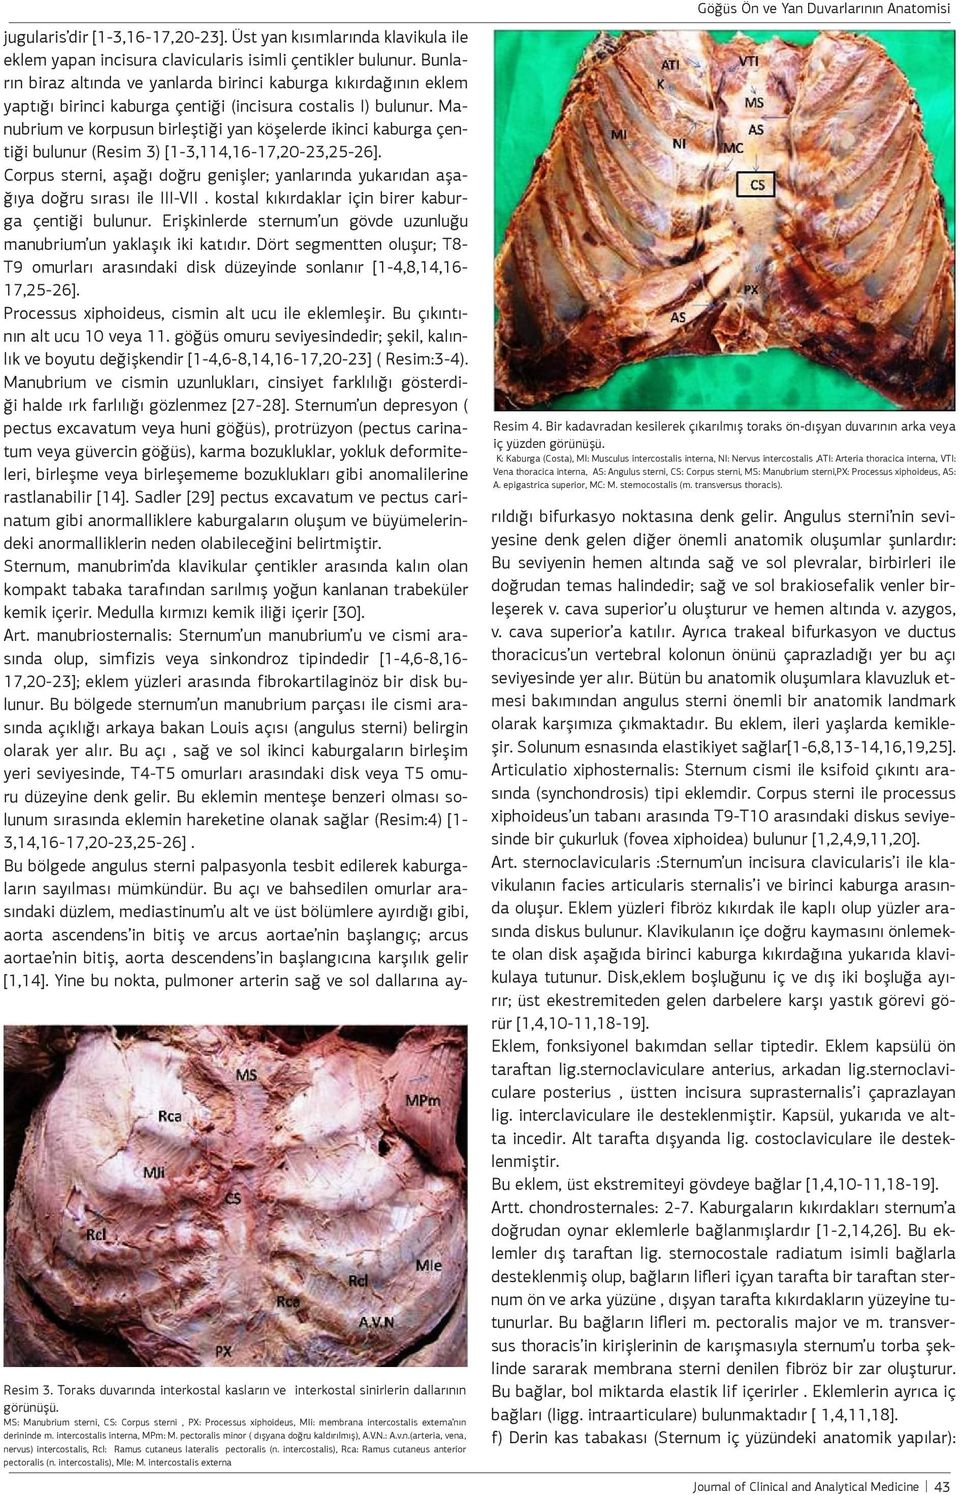 V.N.: A.v.n.(arteria, vena, nervus) intercostalis, Rcl: Ramus cutaneus lateralis pectoralis (n. intercostalis), Rca: Ramus cutaneus anterior pectoralis (n. intercostalis), MIe: M.